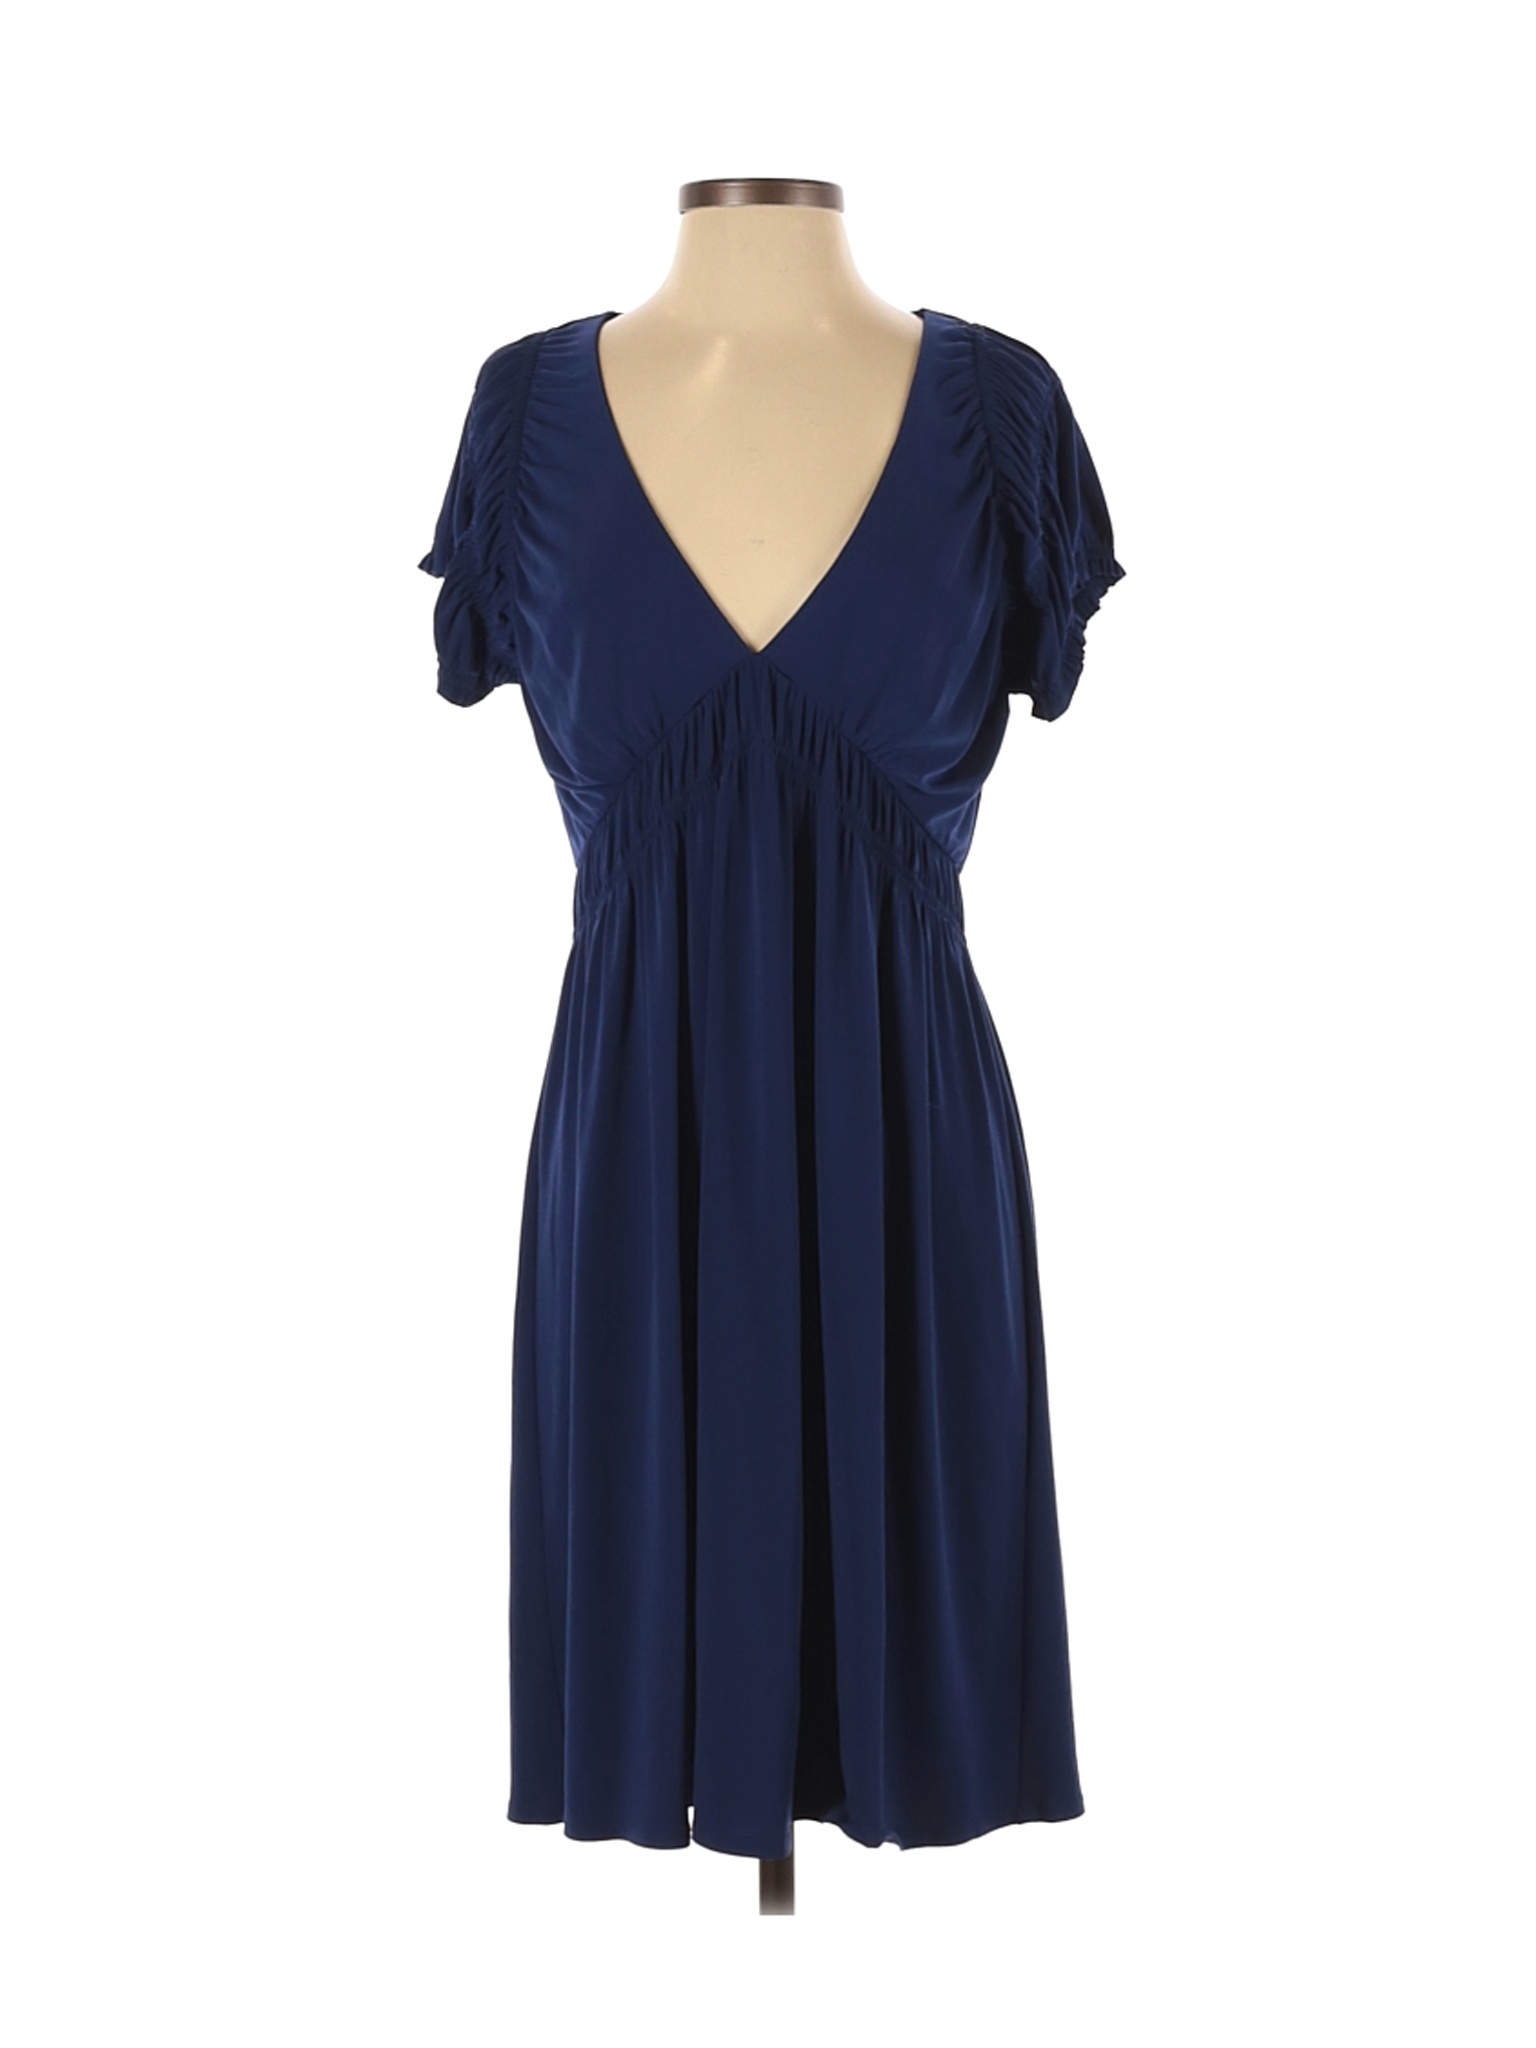 Laundry by Design Women Blue Casual Dress 8 | eBay